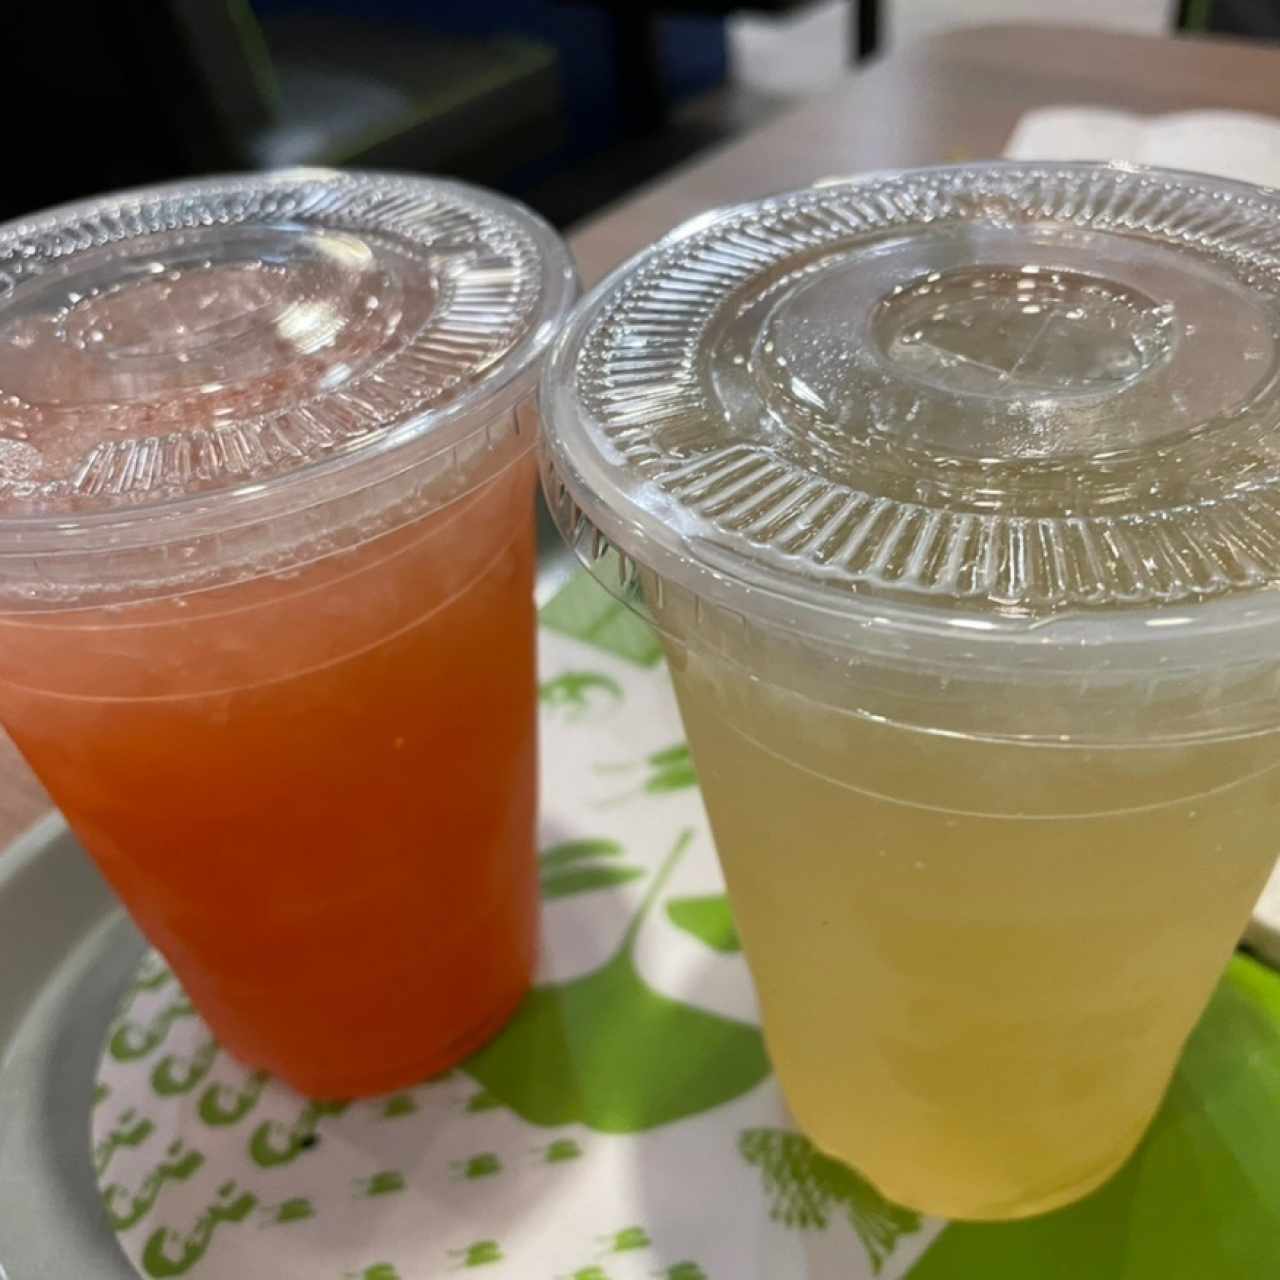 Ginger tea and lemonade